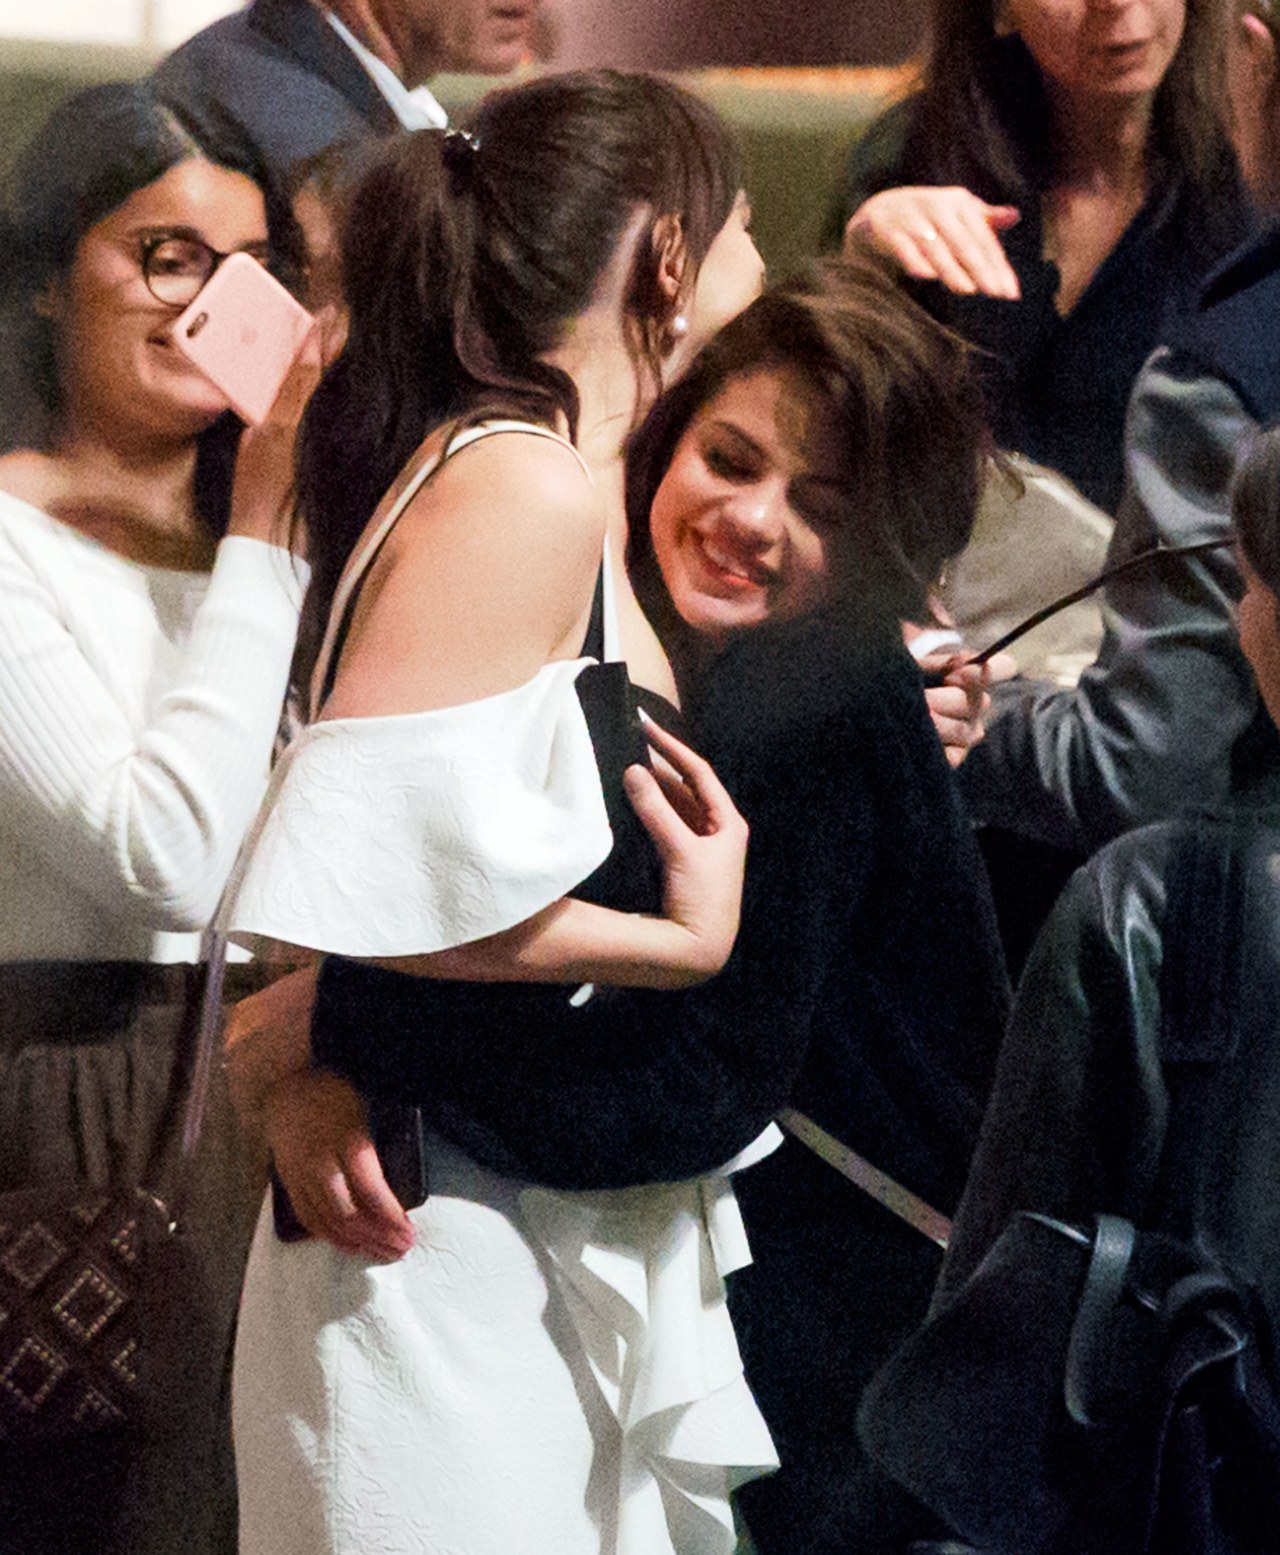 EXCLUSIVO: Selena Gomez surprises Dakota Johnson on Dakota's 27th birthday by giving her a hug at and NY Film Festival event